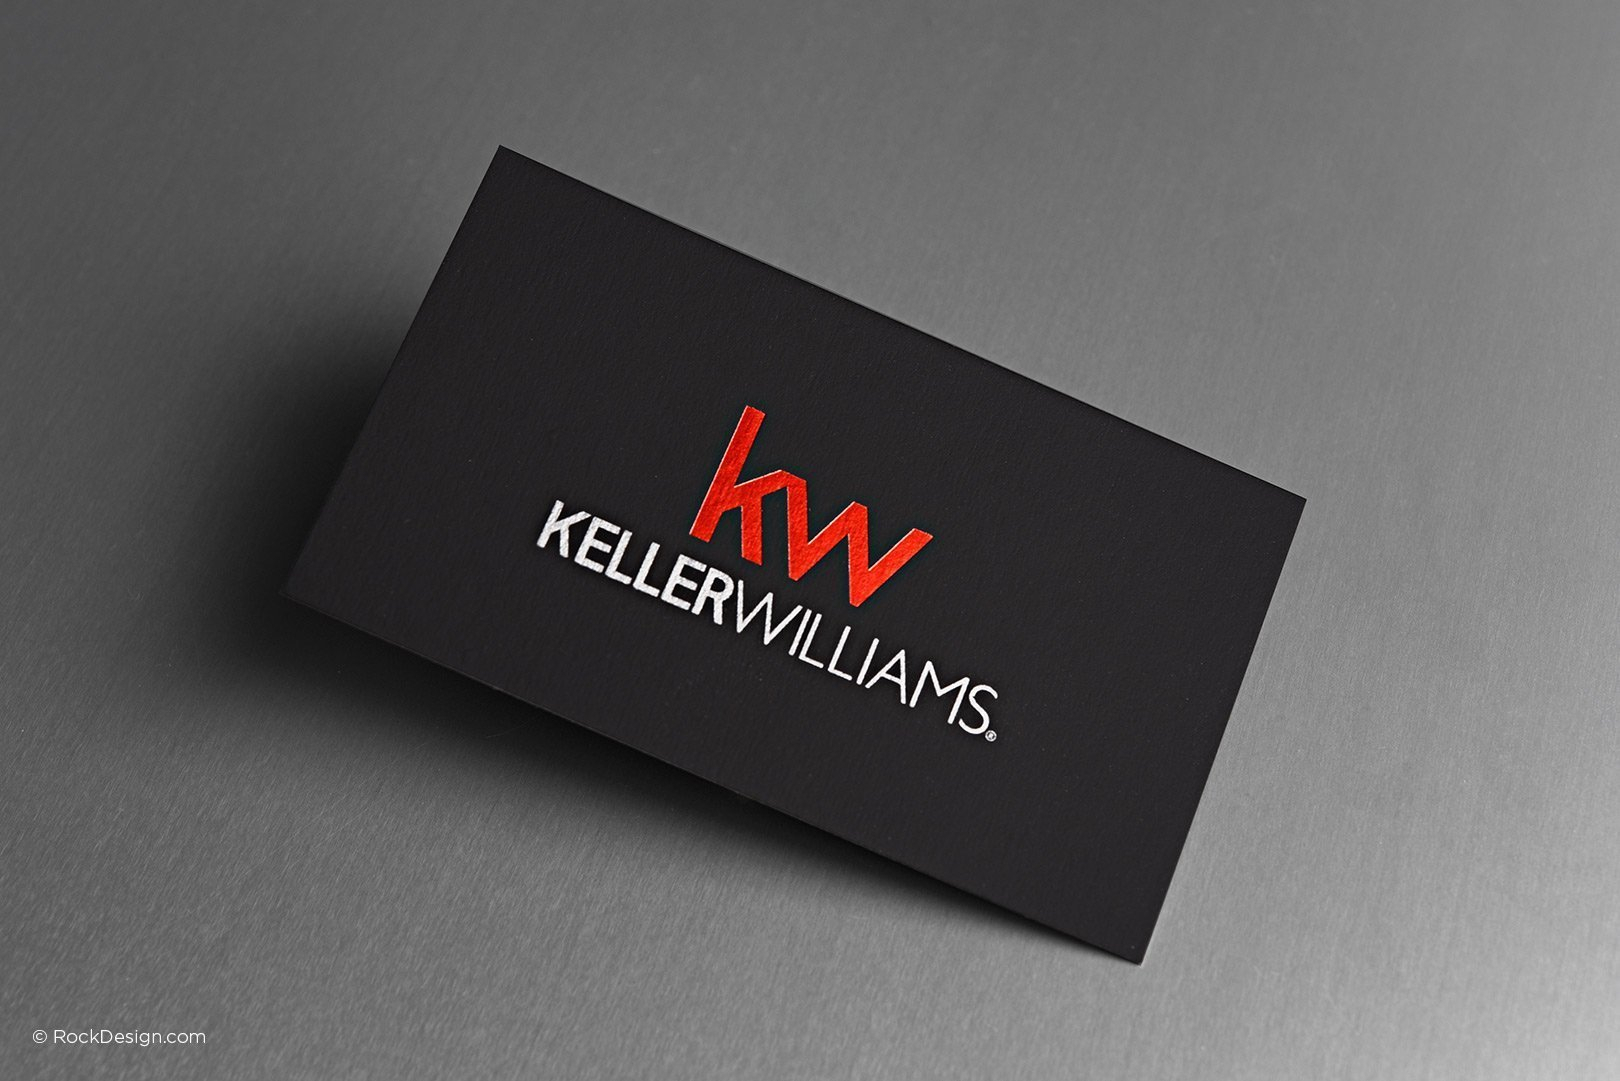 Free Keller Williams Business Card Template With Print For Keller Williams Business Card Templates